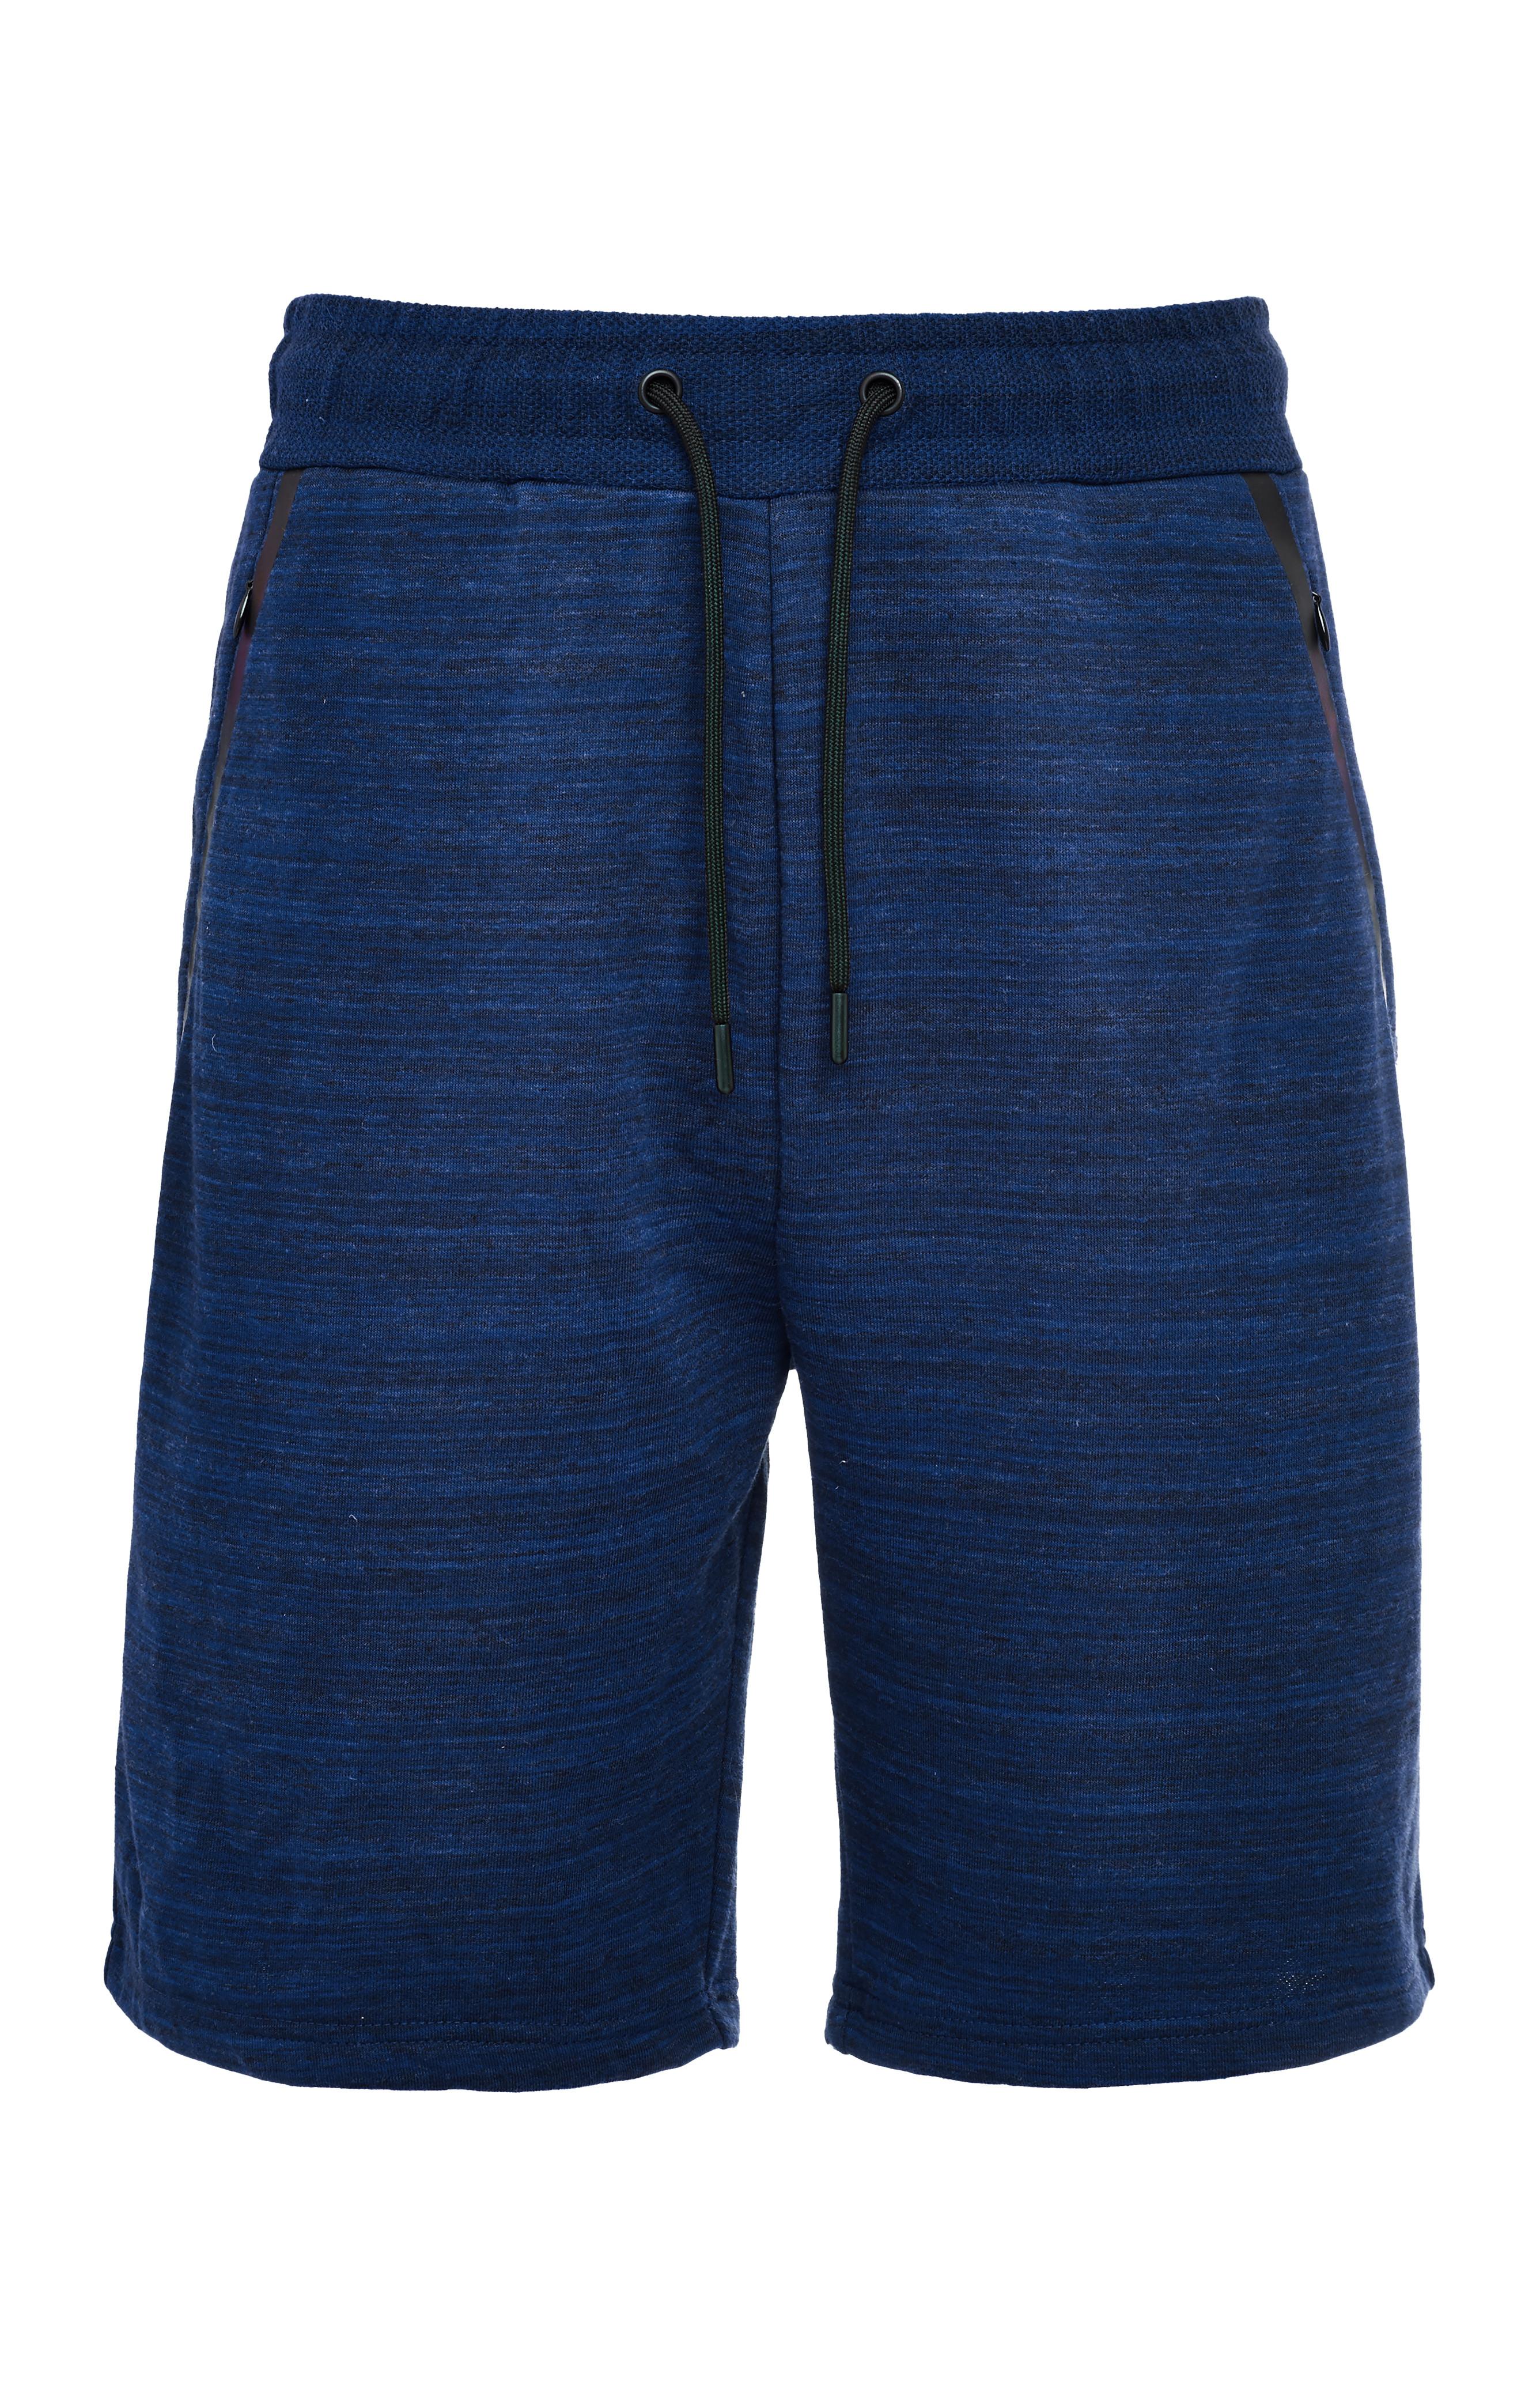 Navy Knitted Texture Tie Waist Sports Shorts | Men's Shorts | Men's ...